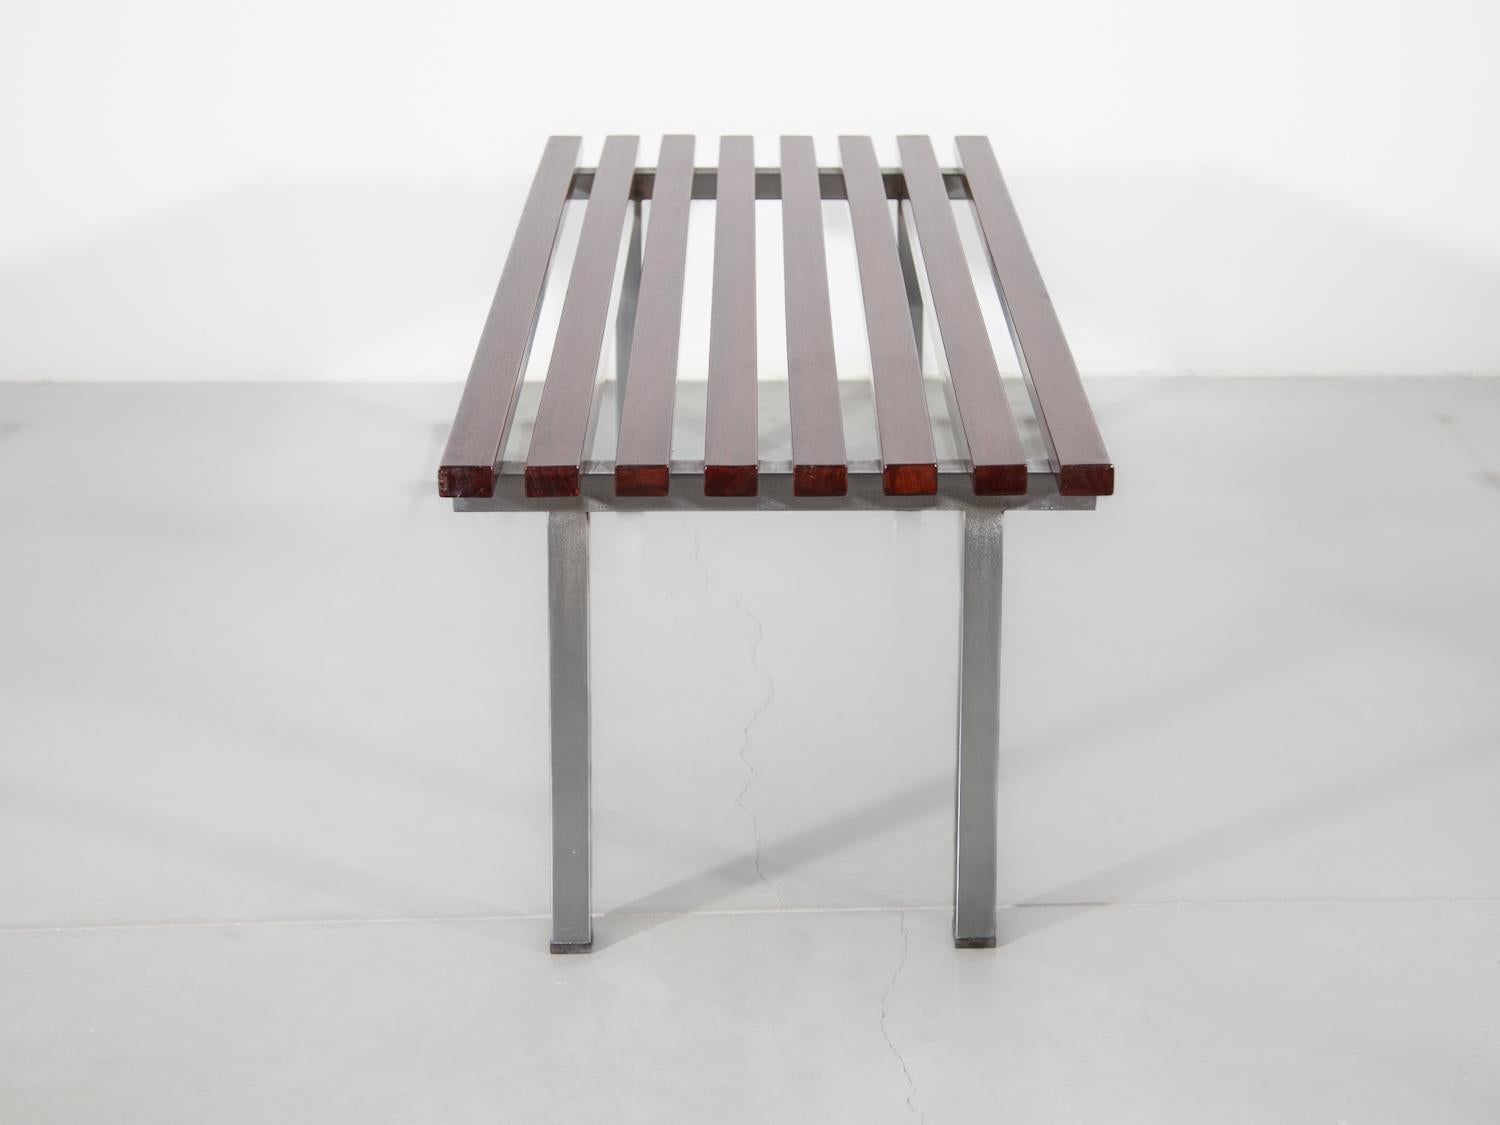 Stainless Steel Minimalist Alfred Hendrickx Slatted Bench, 1960s, Belgium Design